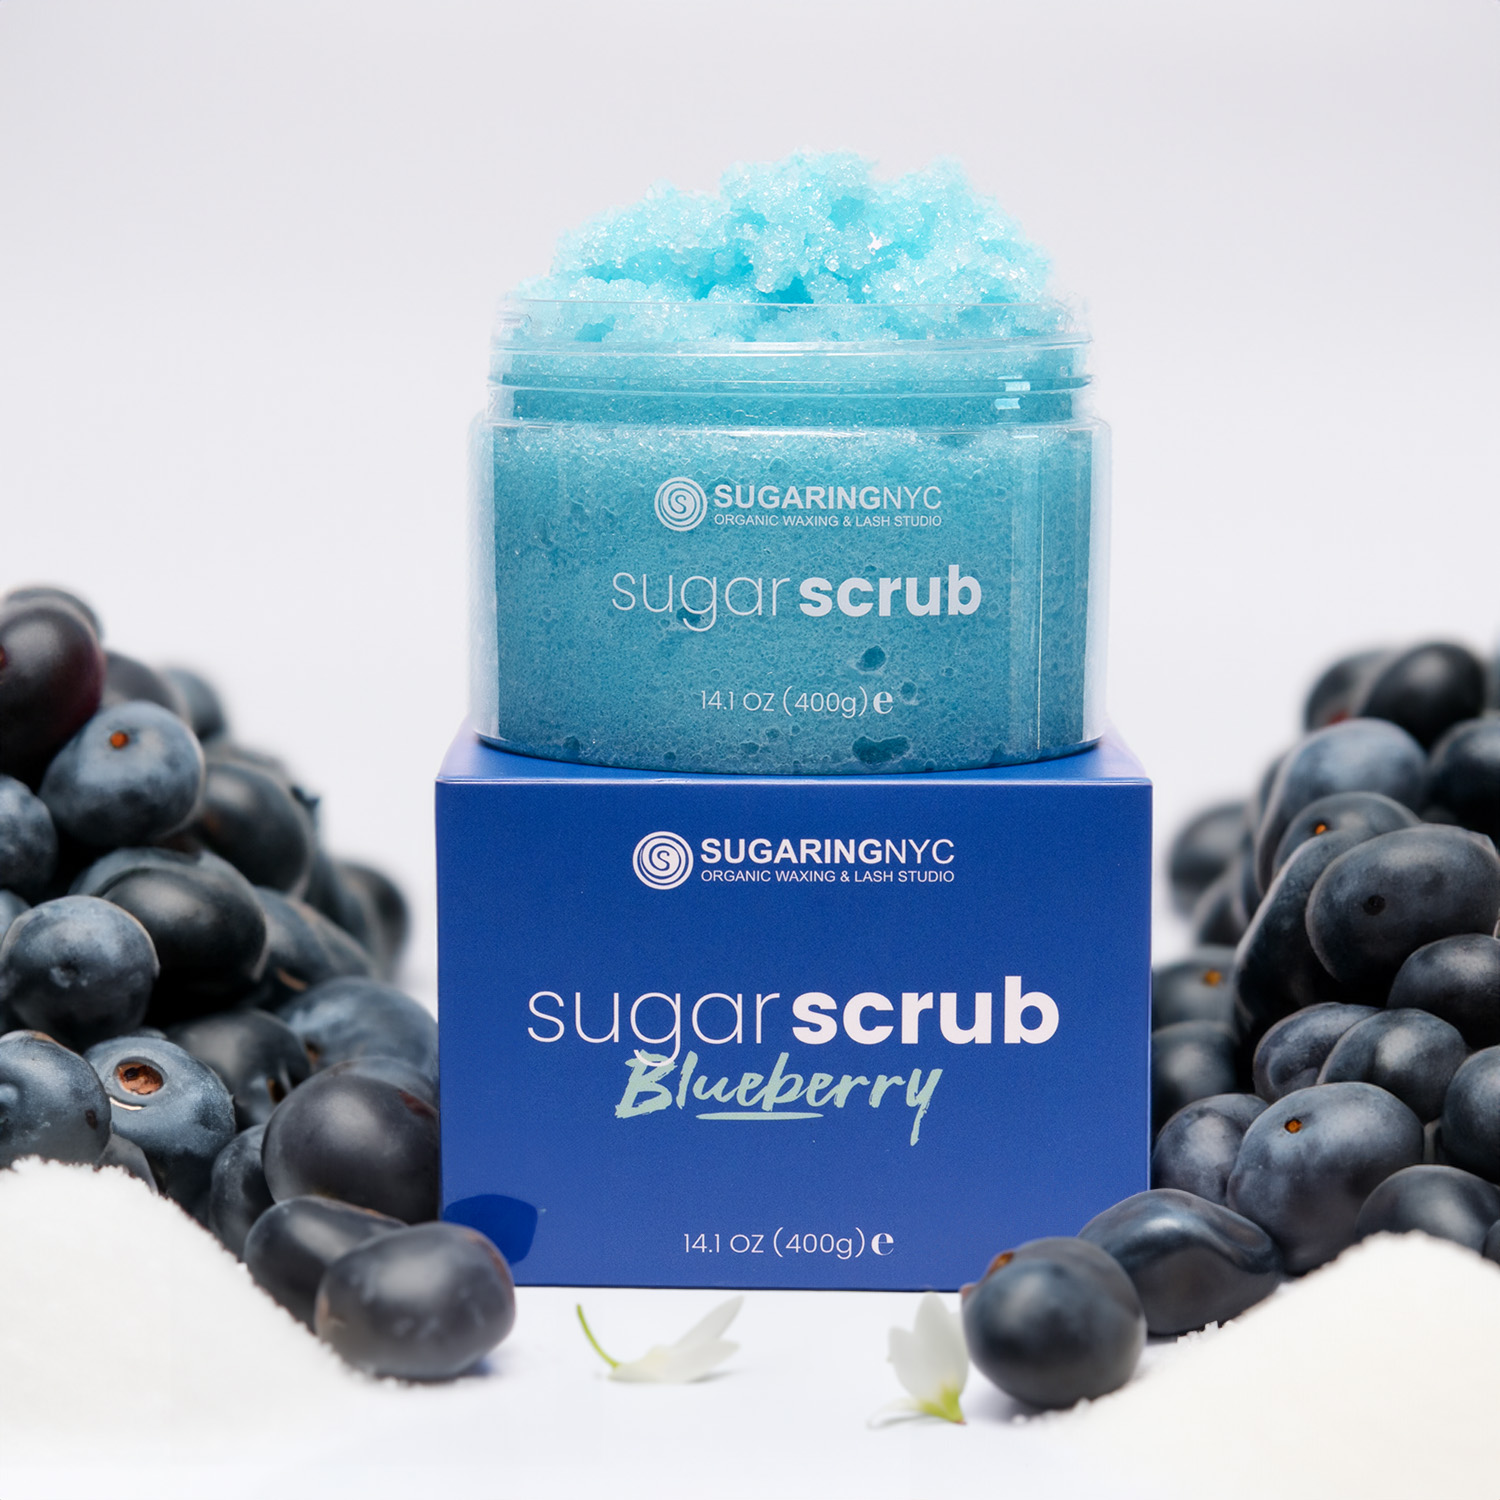 Sugaring NYC Signature Sugar Scrub – Sweet Blueberry